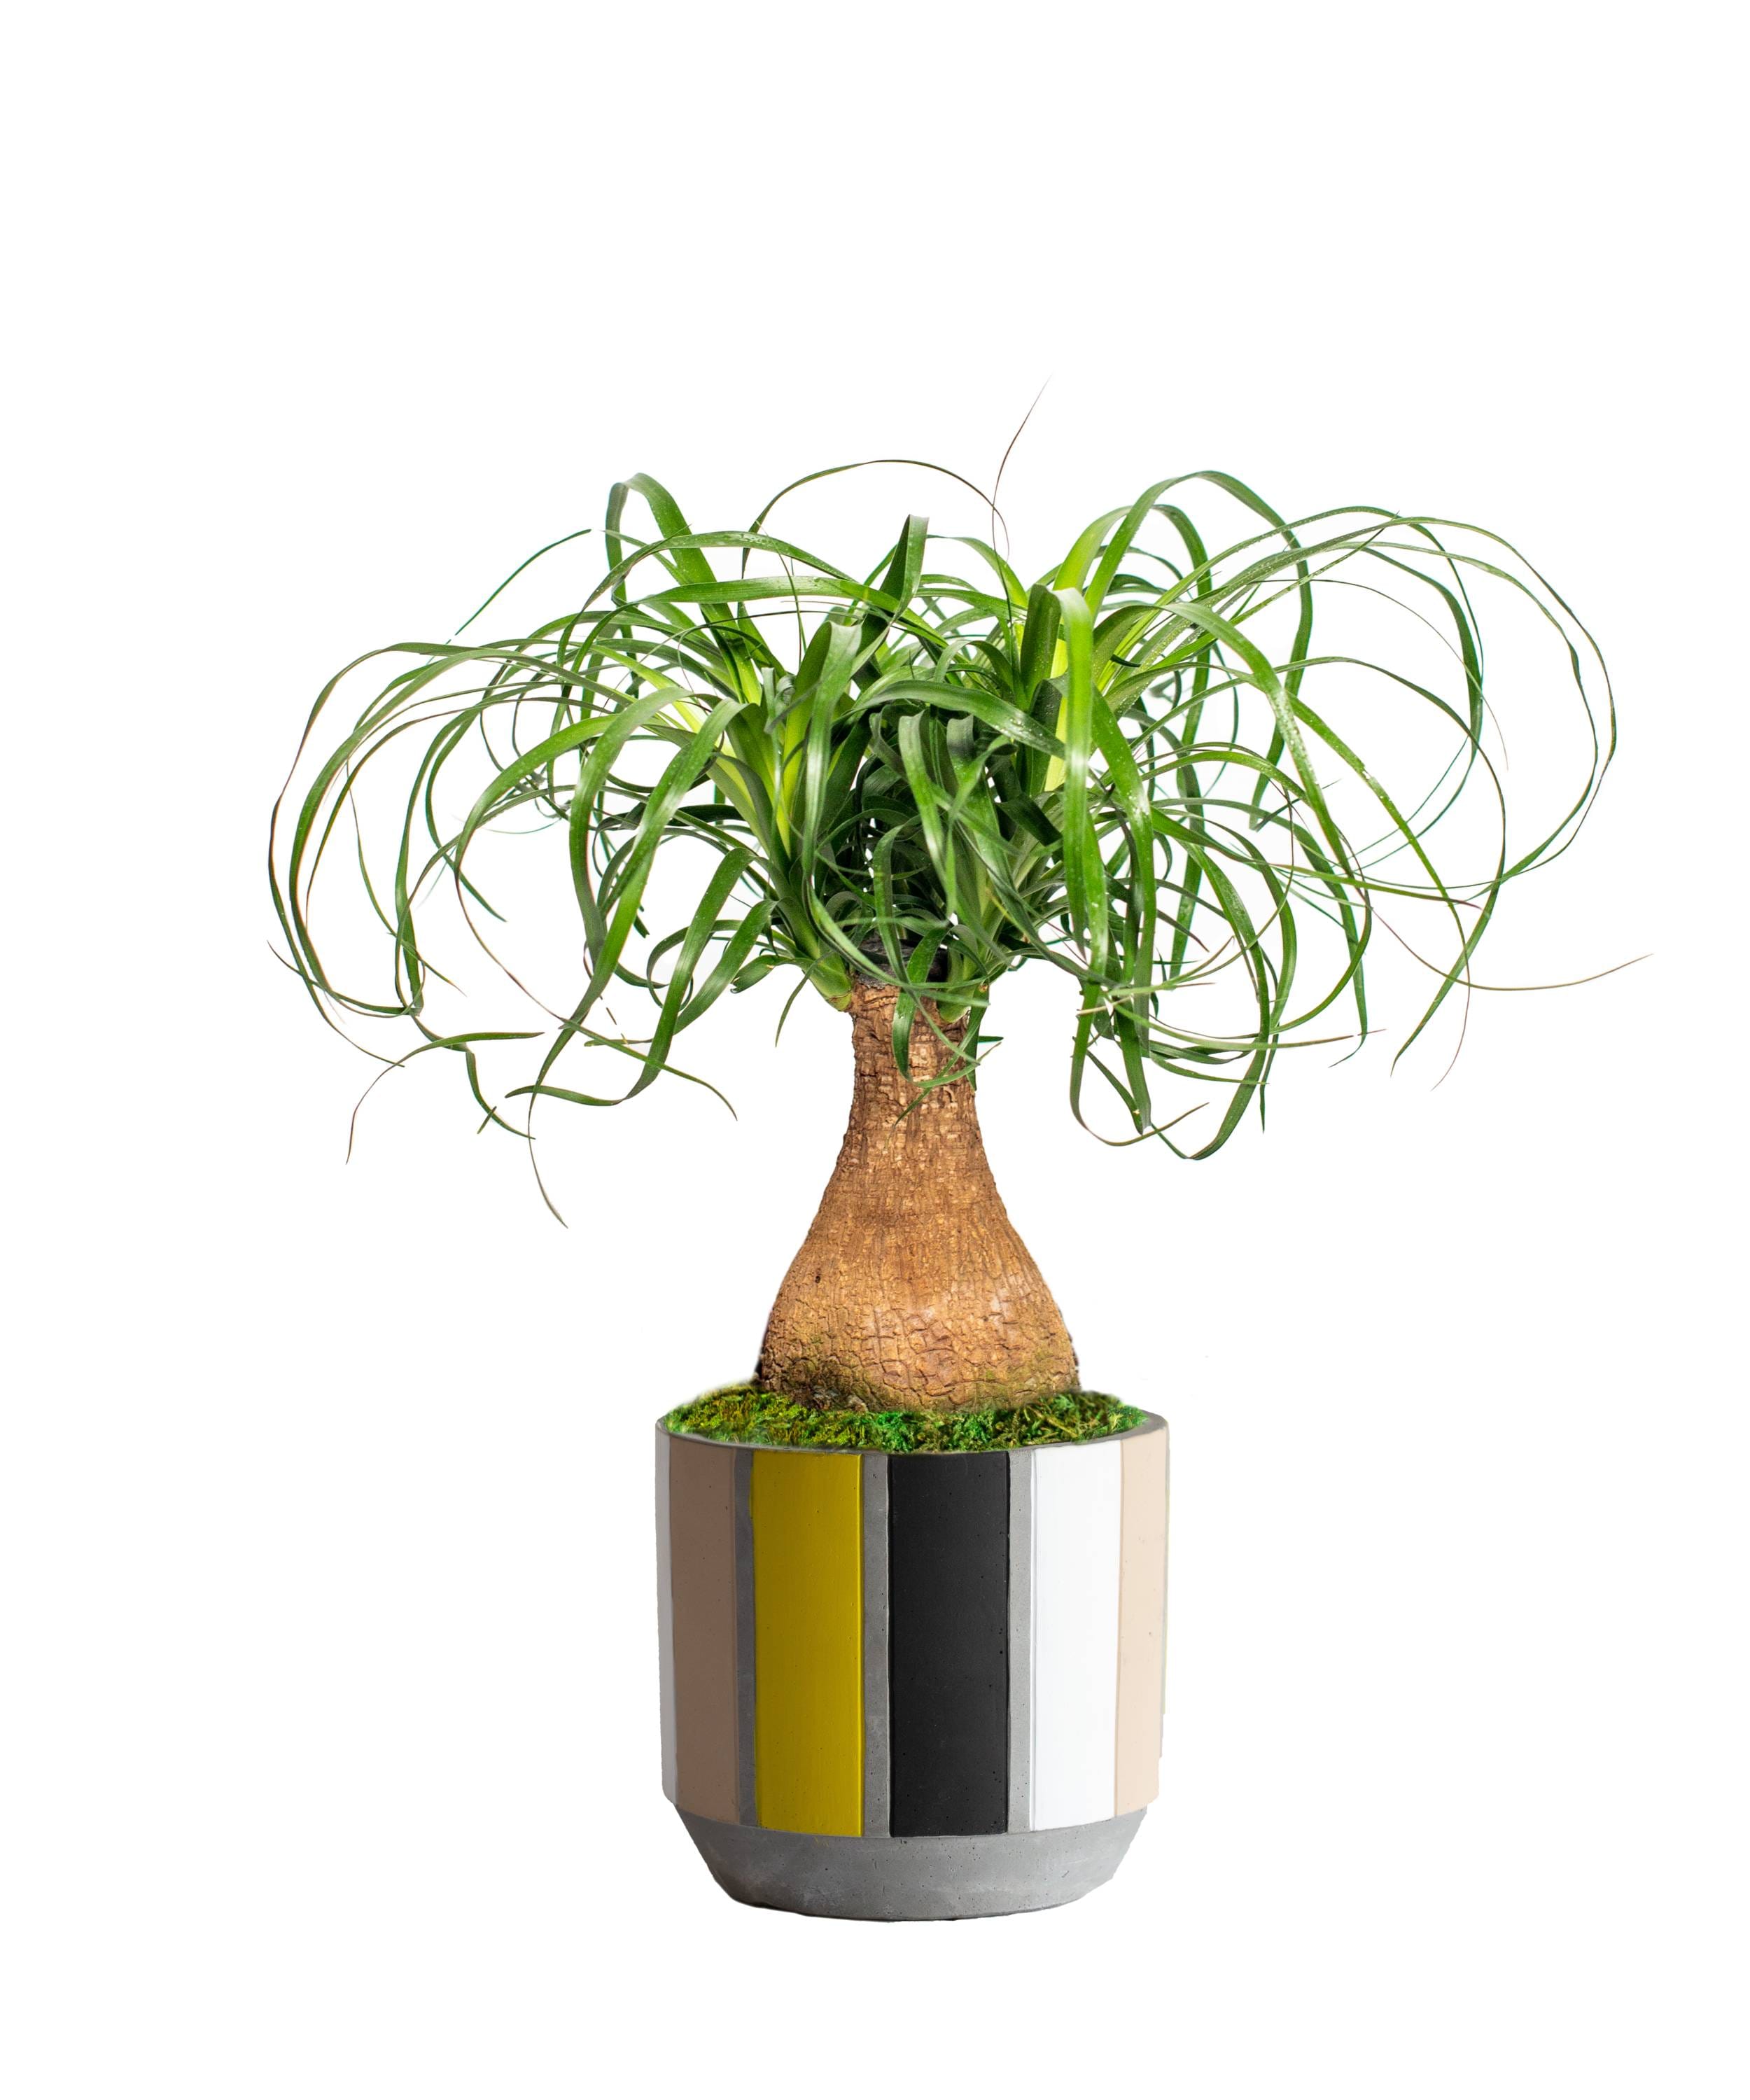 Urban Leaf - Suction Cup Shelf for Plants Window Bathroom or Kitchen